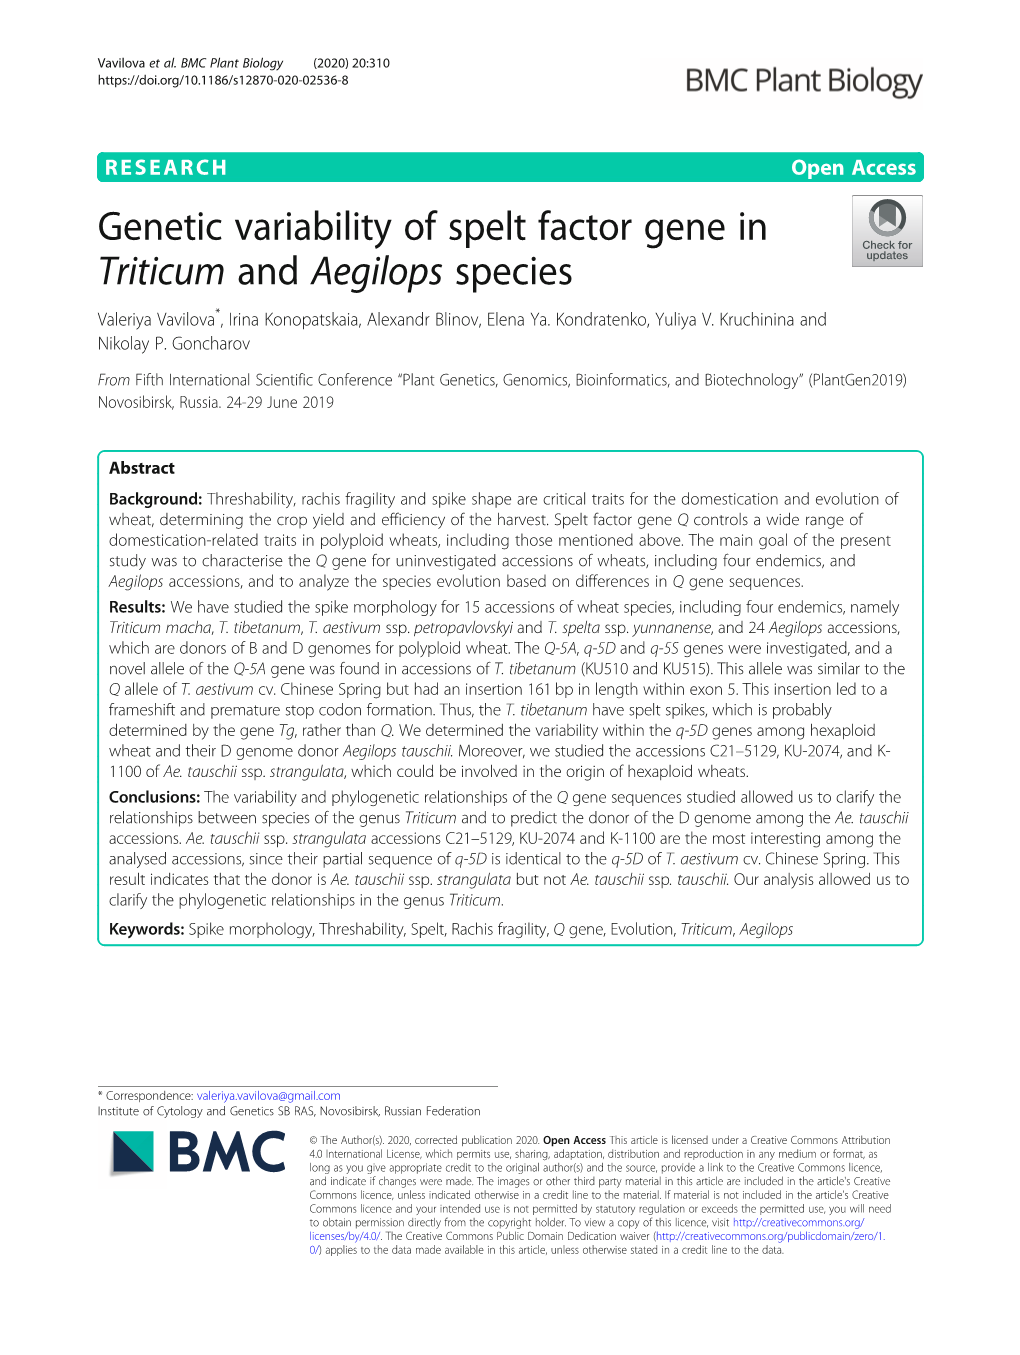 Genetic Variability of Spelt Factor Gene in Triticum and Aegilops Species Valeriya Vavilova*, Irina Konopatskaia, Alexandr Blinov, Elena Ya